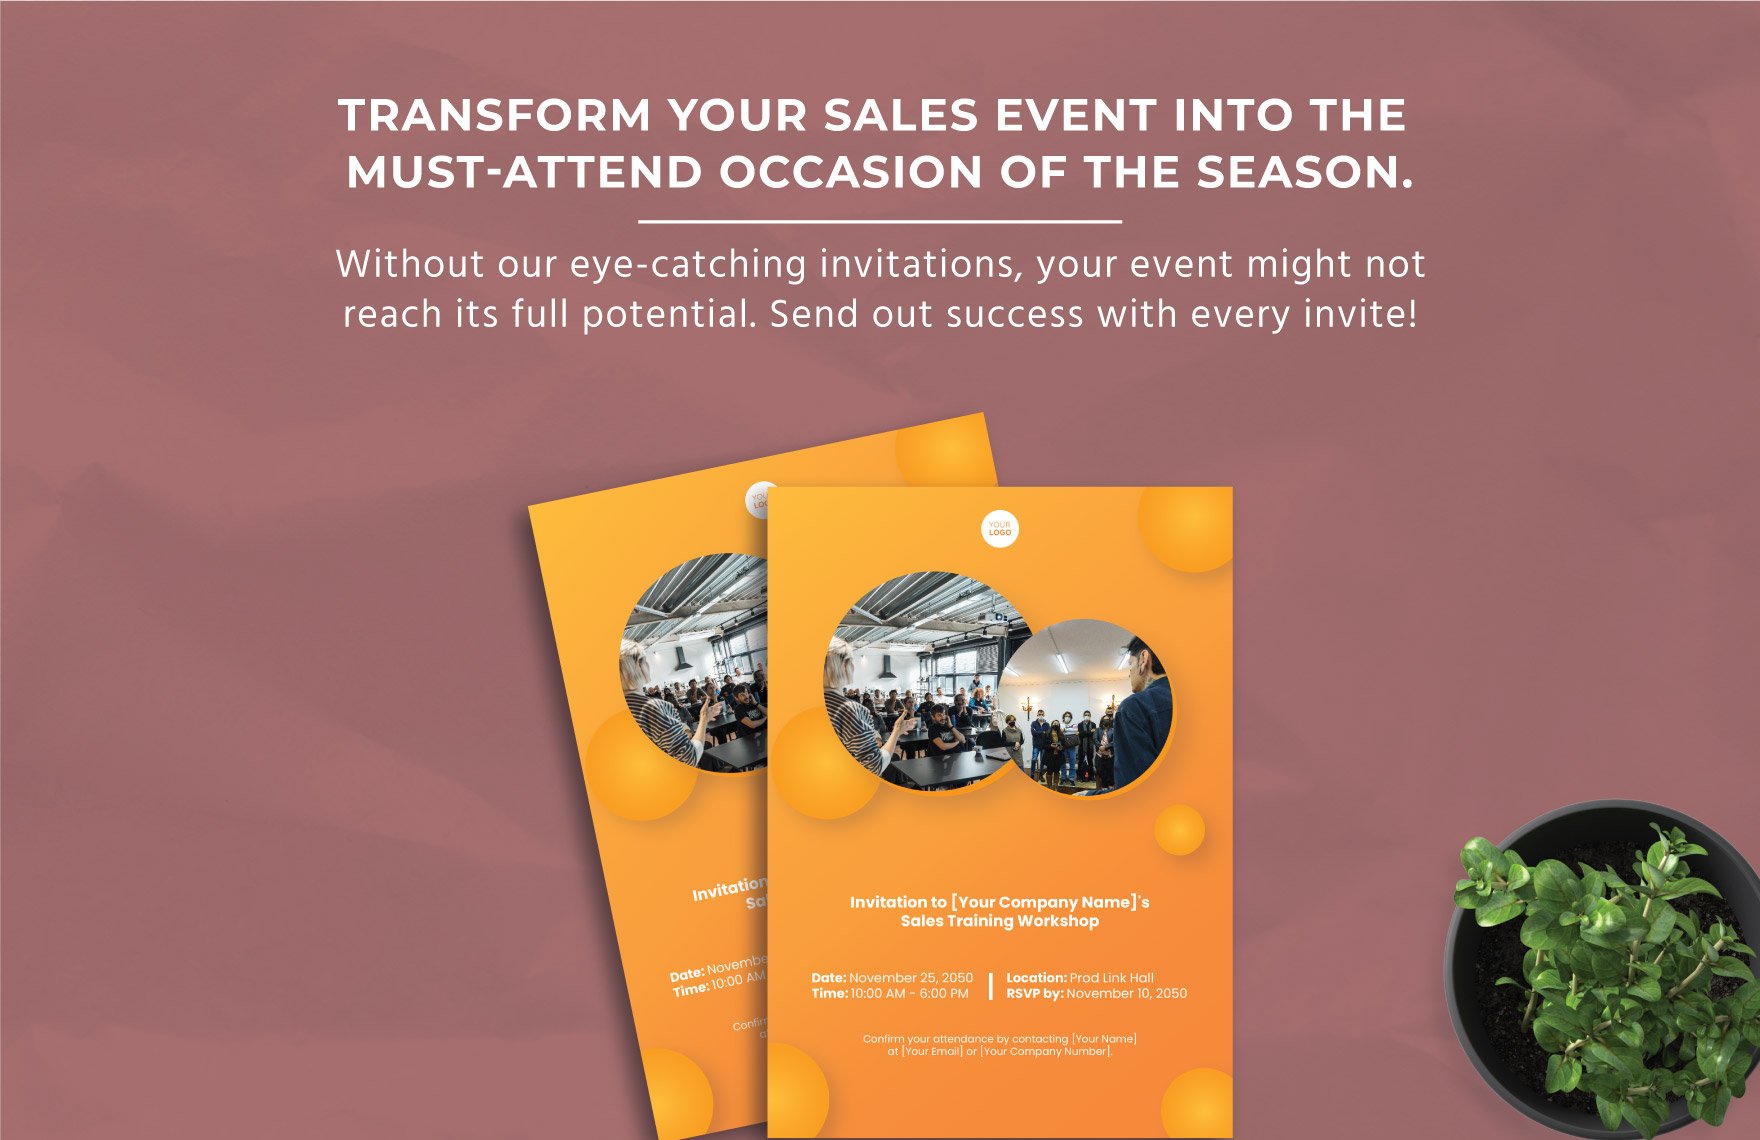 Sales Training Workshop Invitation Card Template